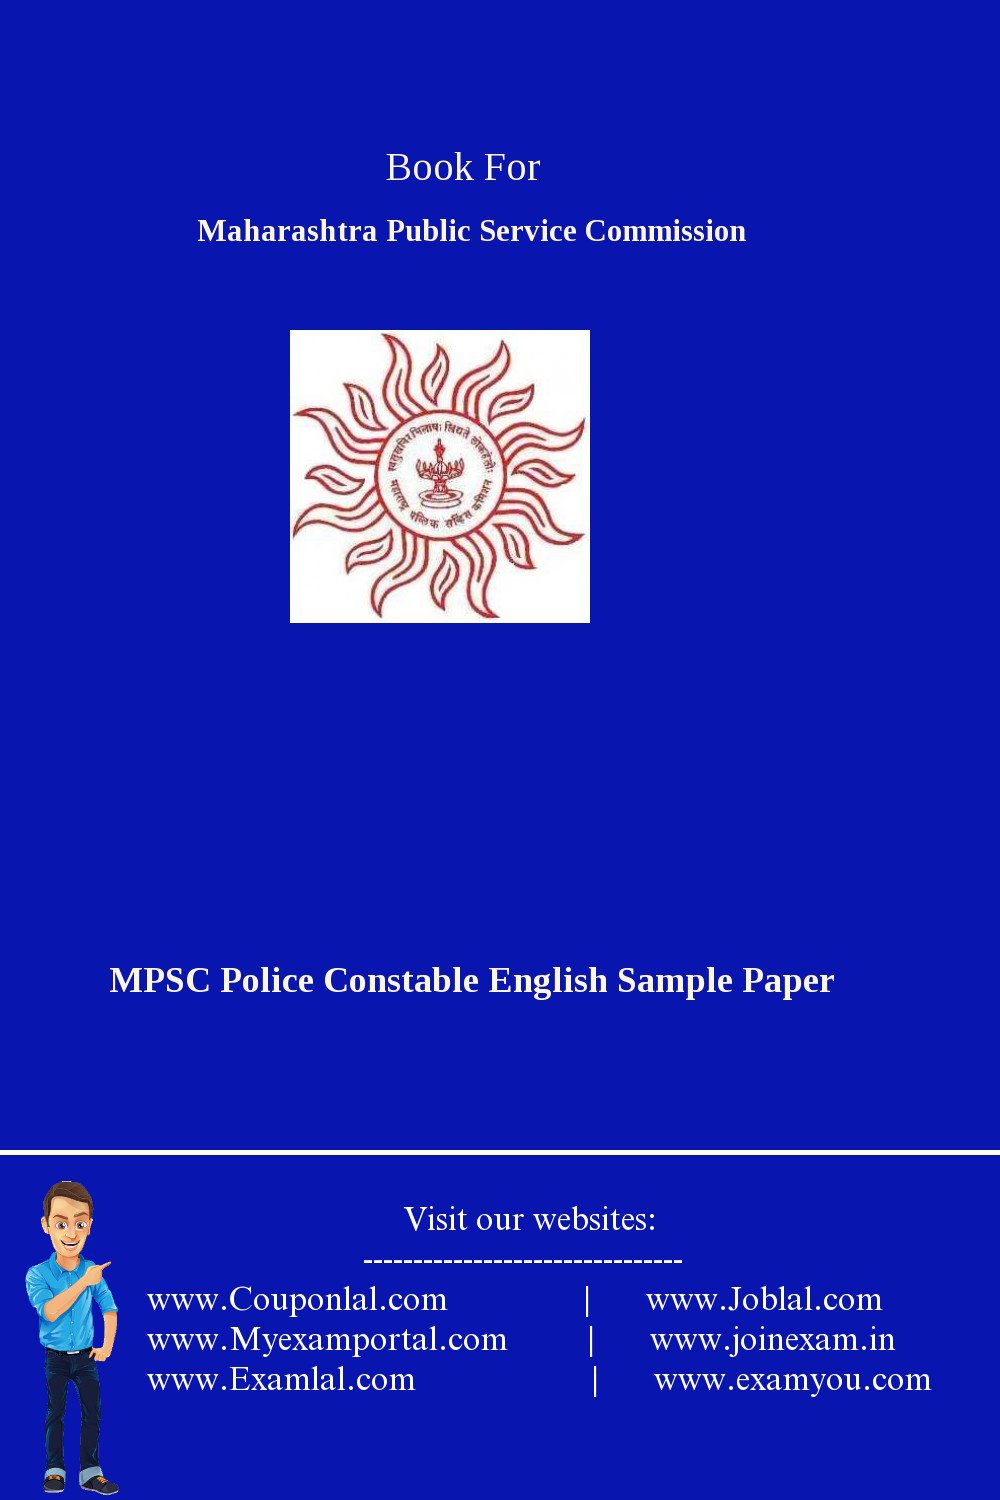 mpsc material pdf